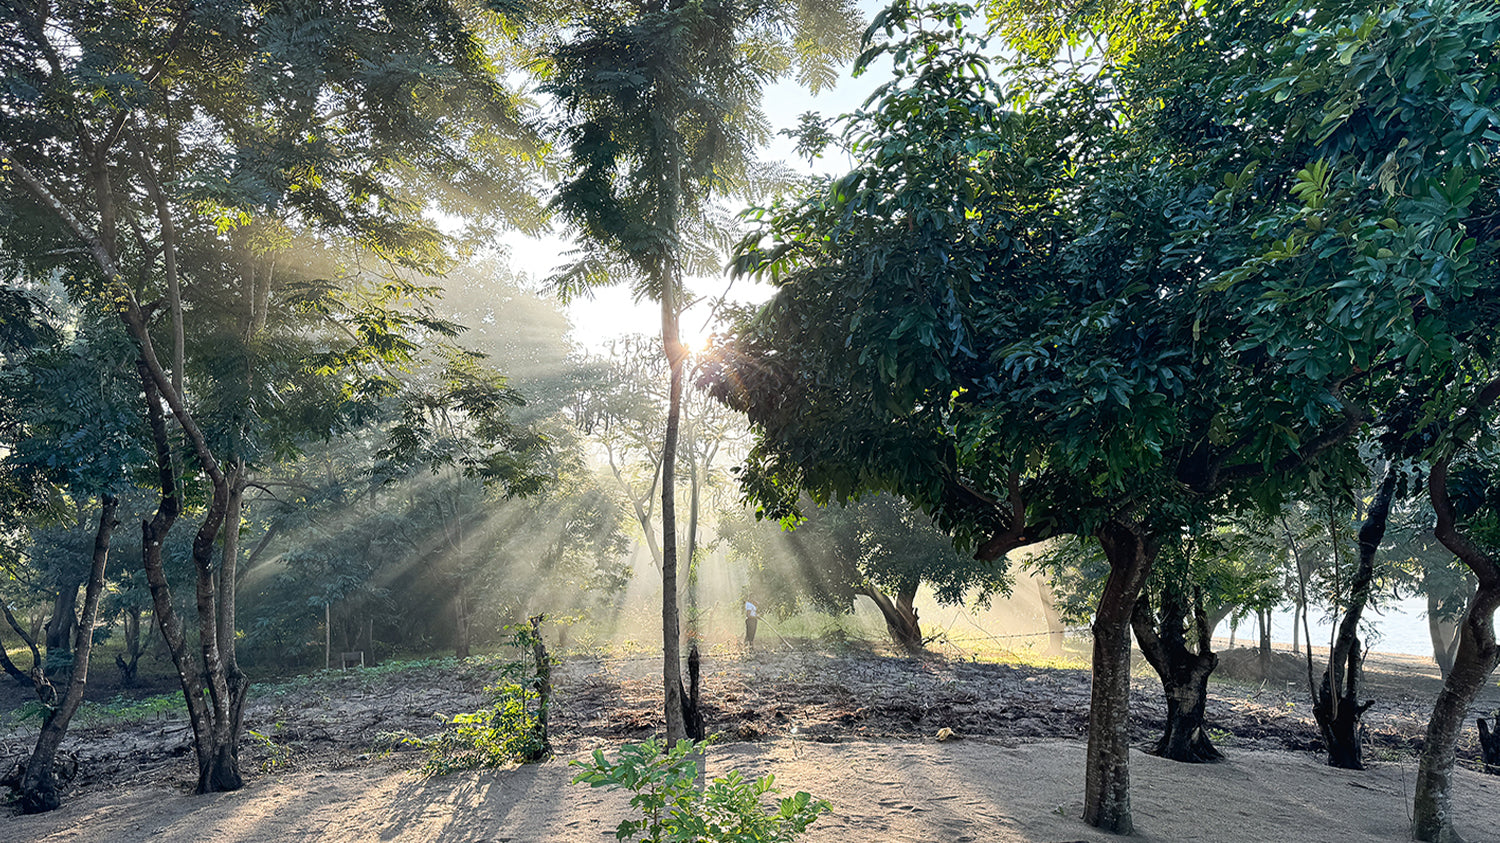 The sunrise shining through a grove of vibrant green trees in Tanzania